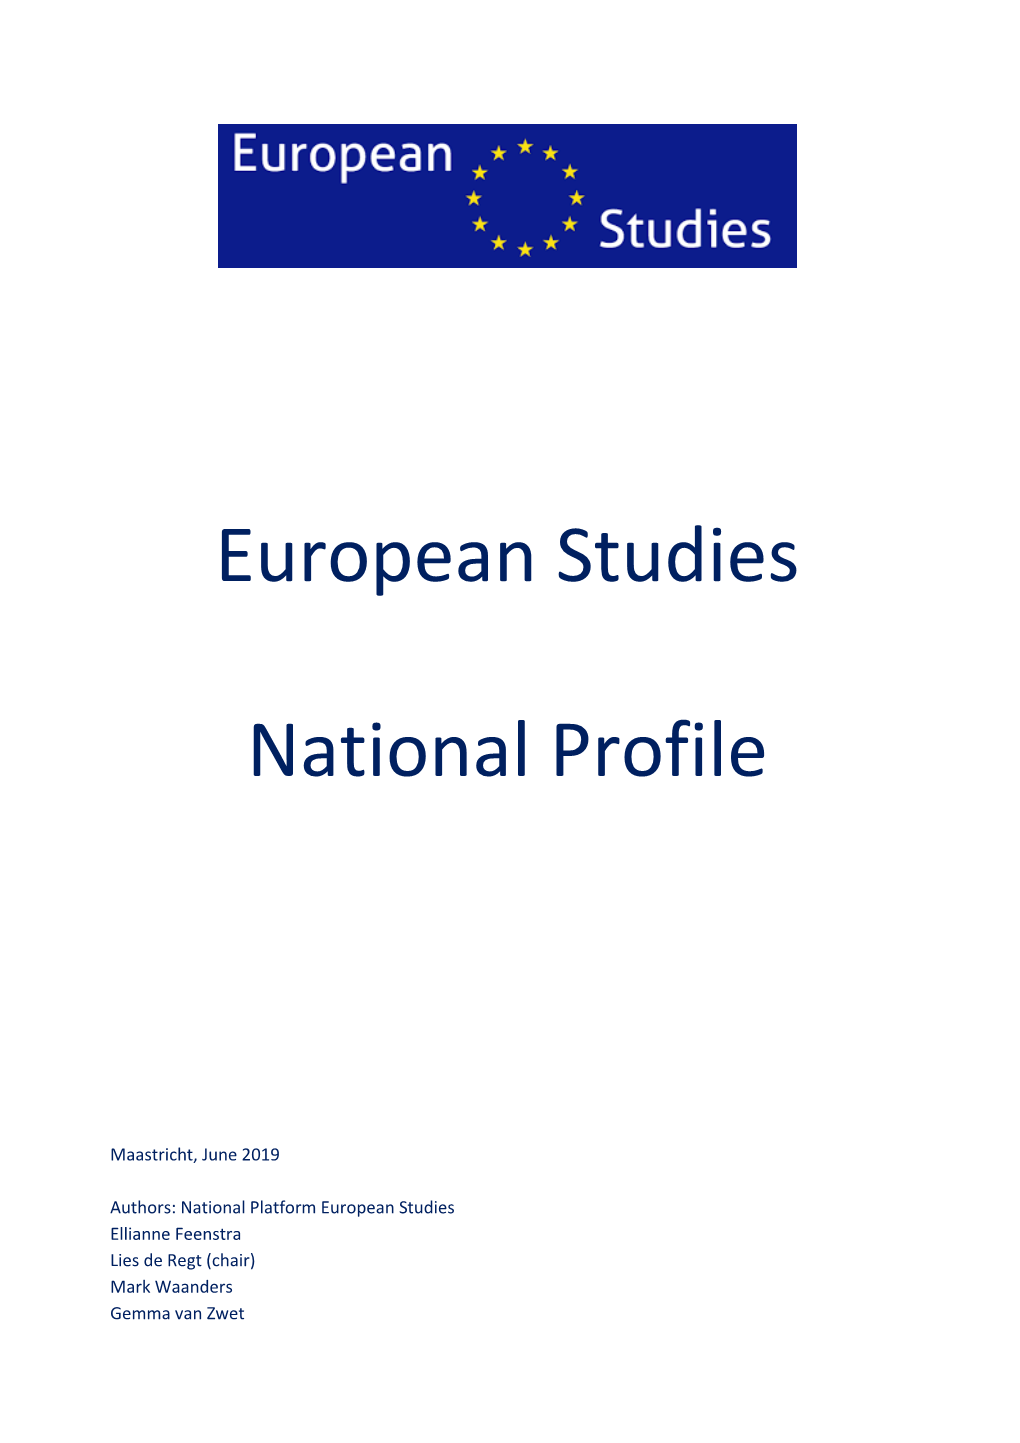 European Studies National Profile 2019